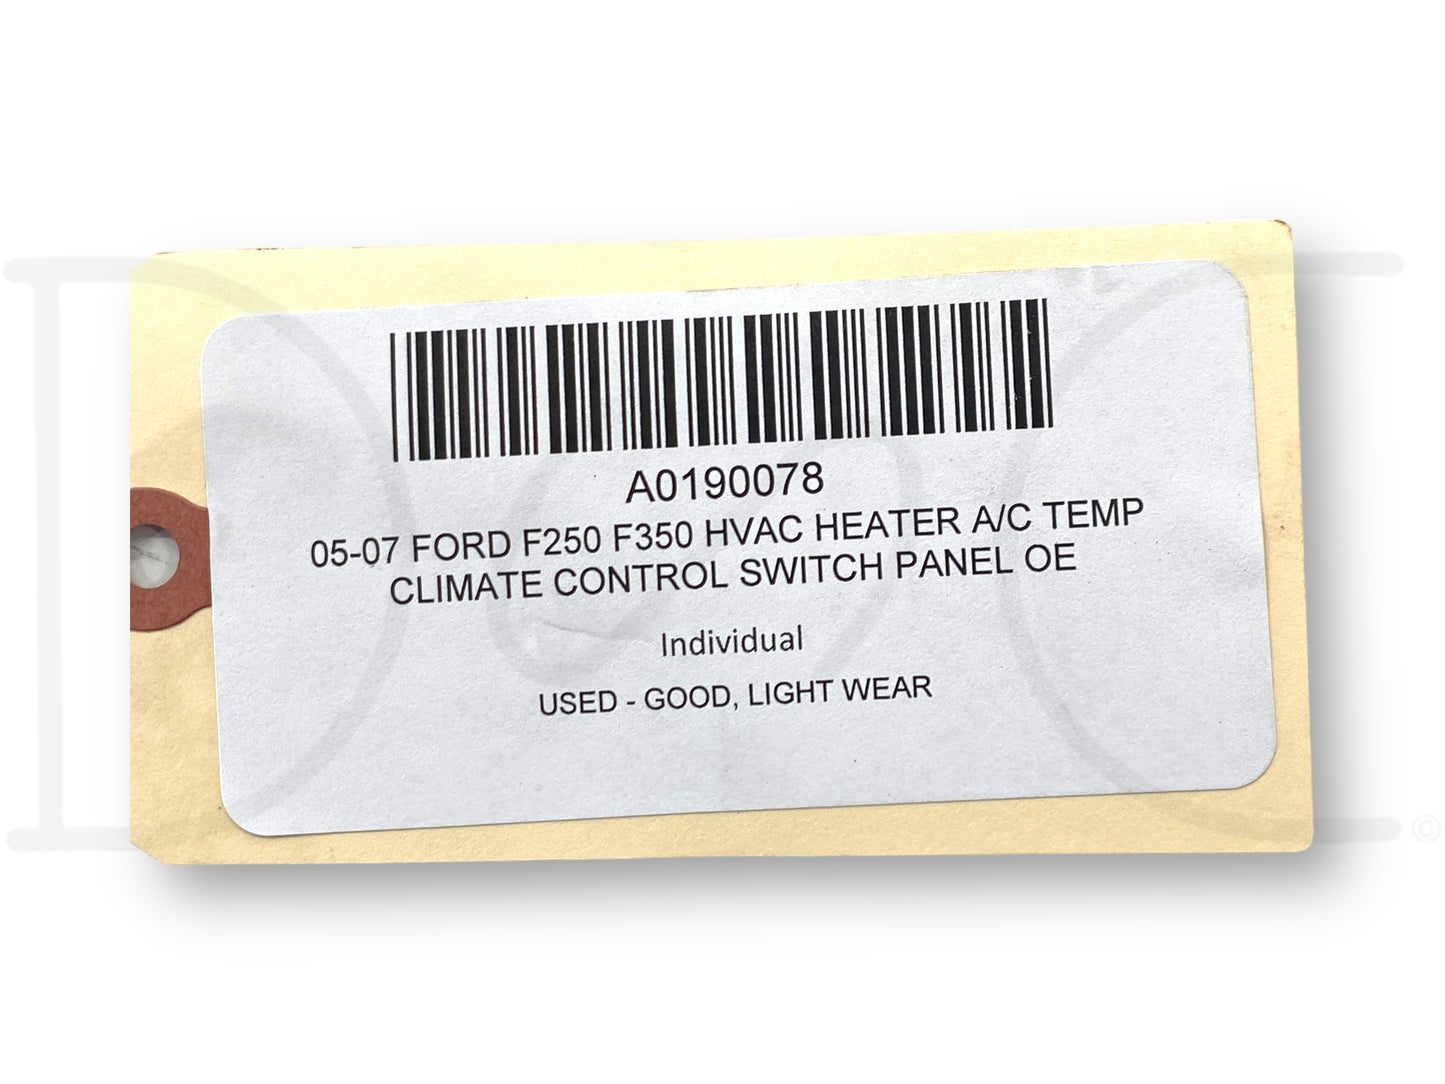 05-07 Ford F250 F350 HVAC Heater A/C Temp Climate Control Switch Panel OE